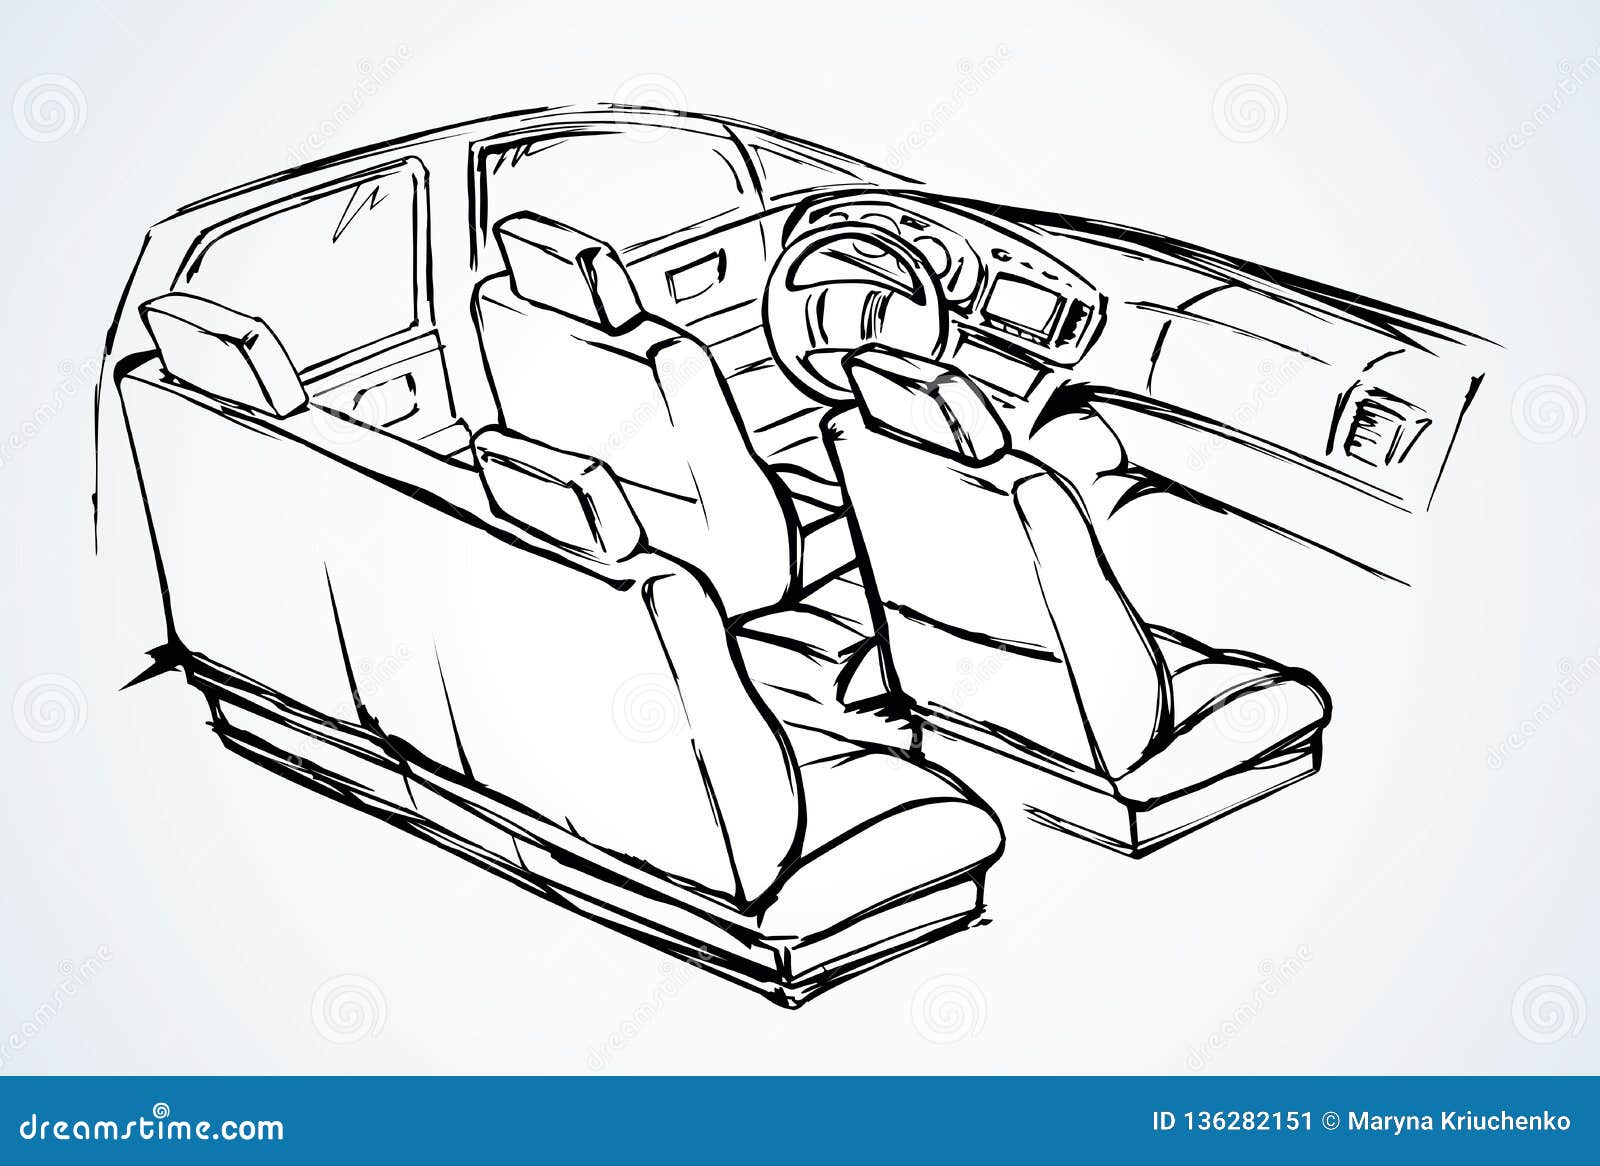 Car interior sketch by fairuz shafni at Coroflotcom